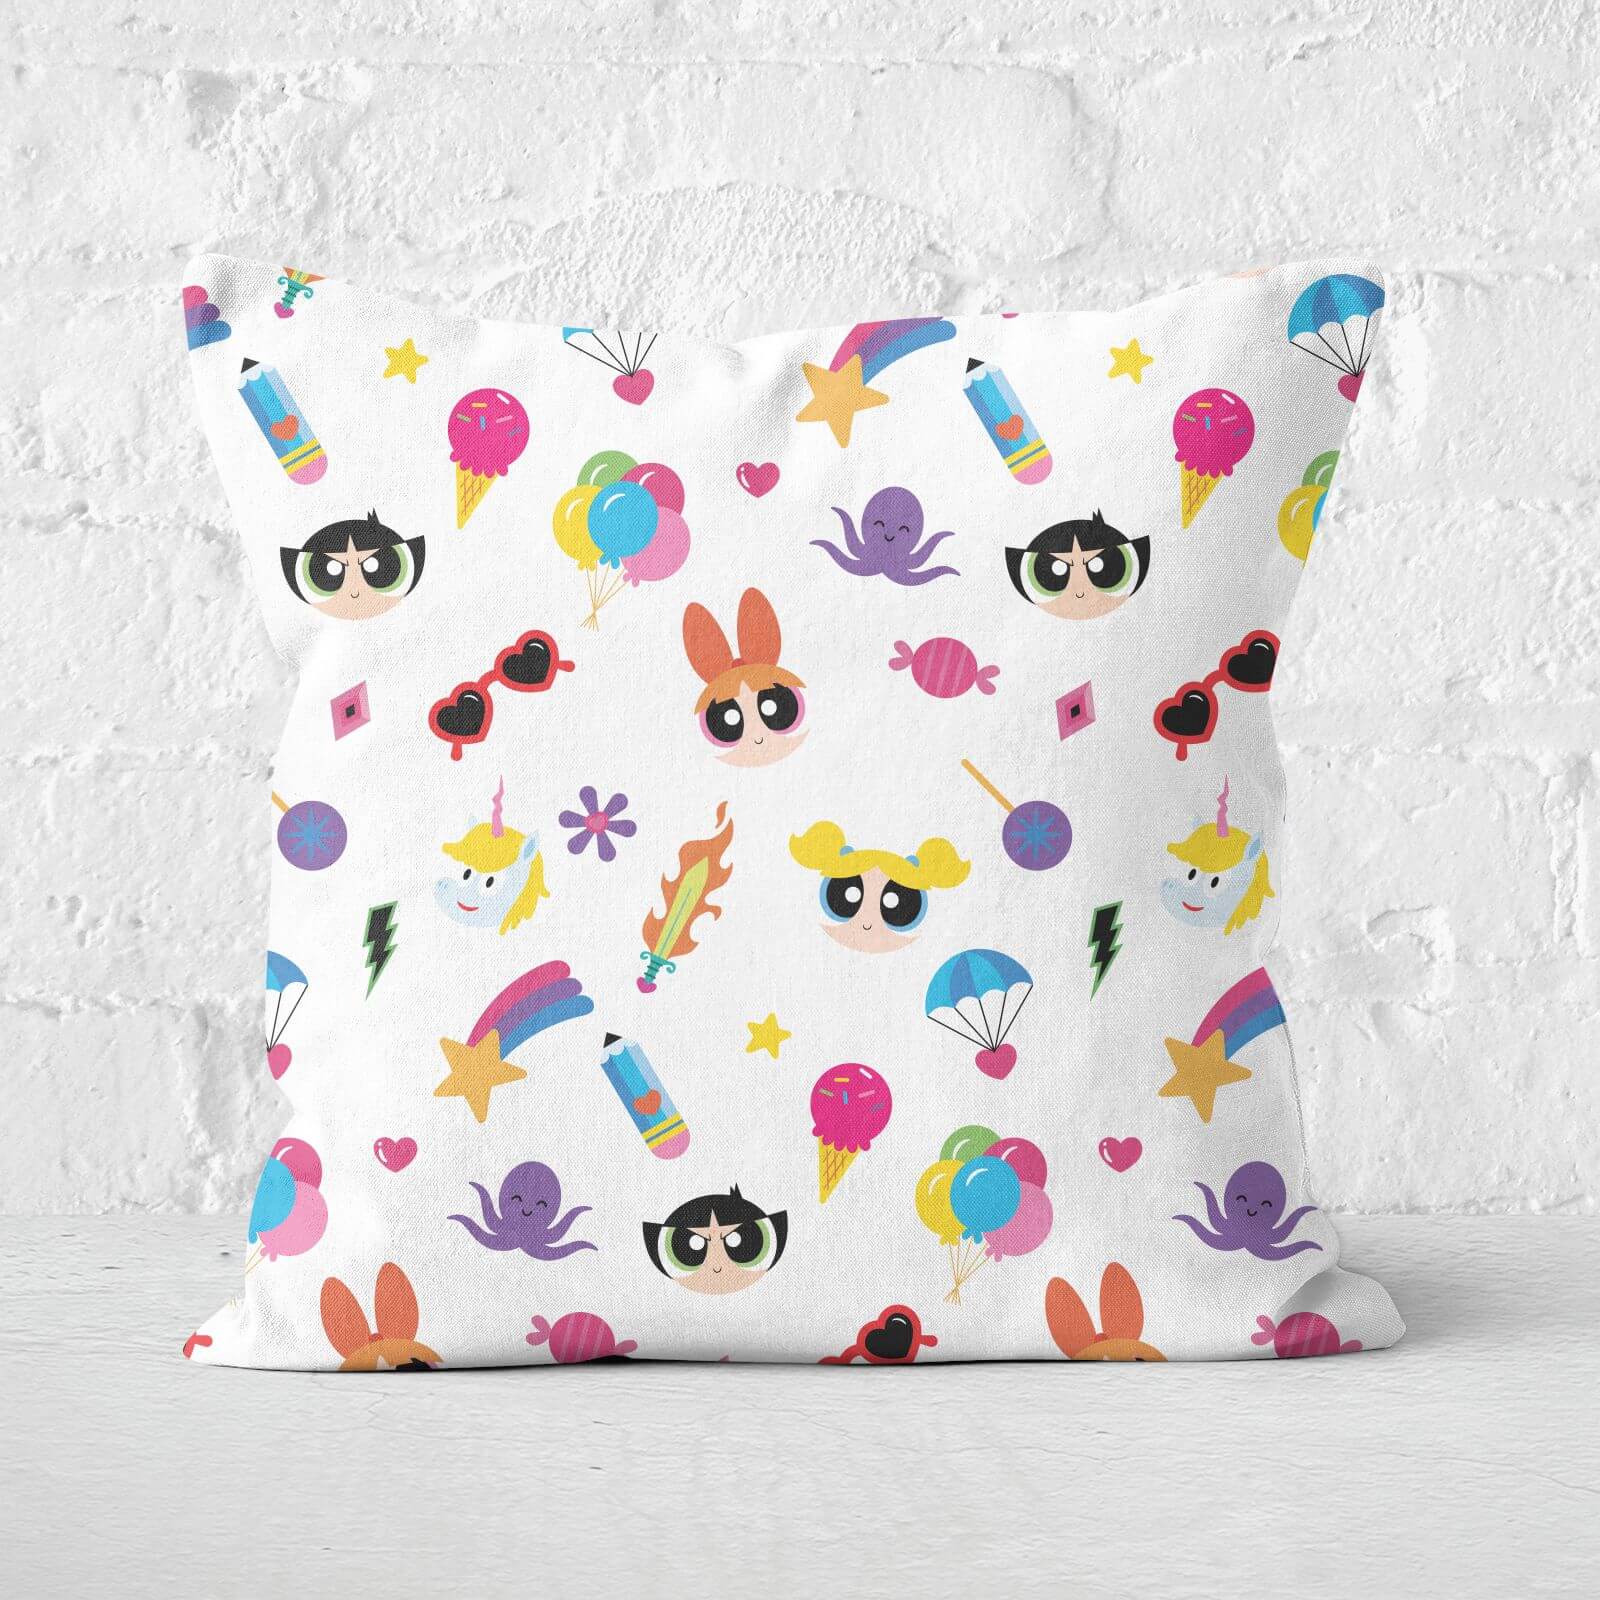 The Powerpuff Girls Colourful Square Cushion - 60x60cm - Soft Touch